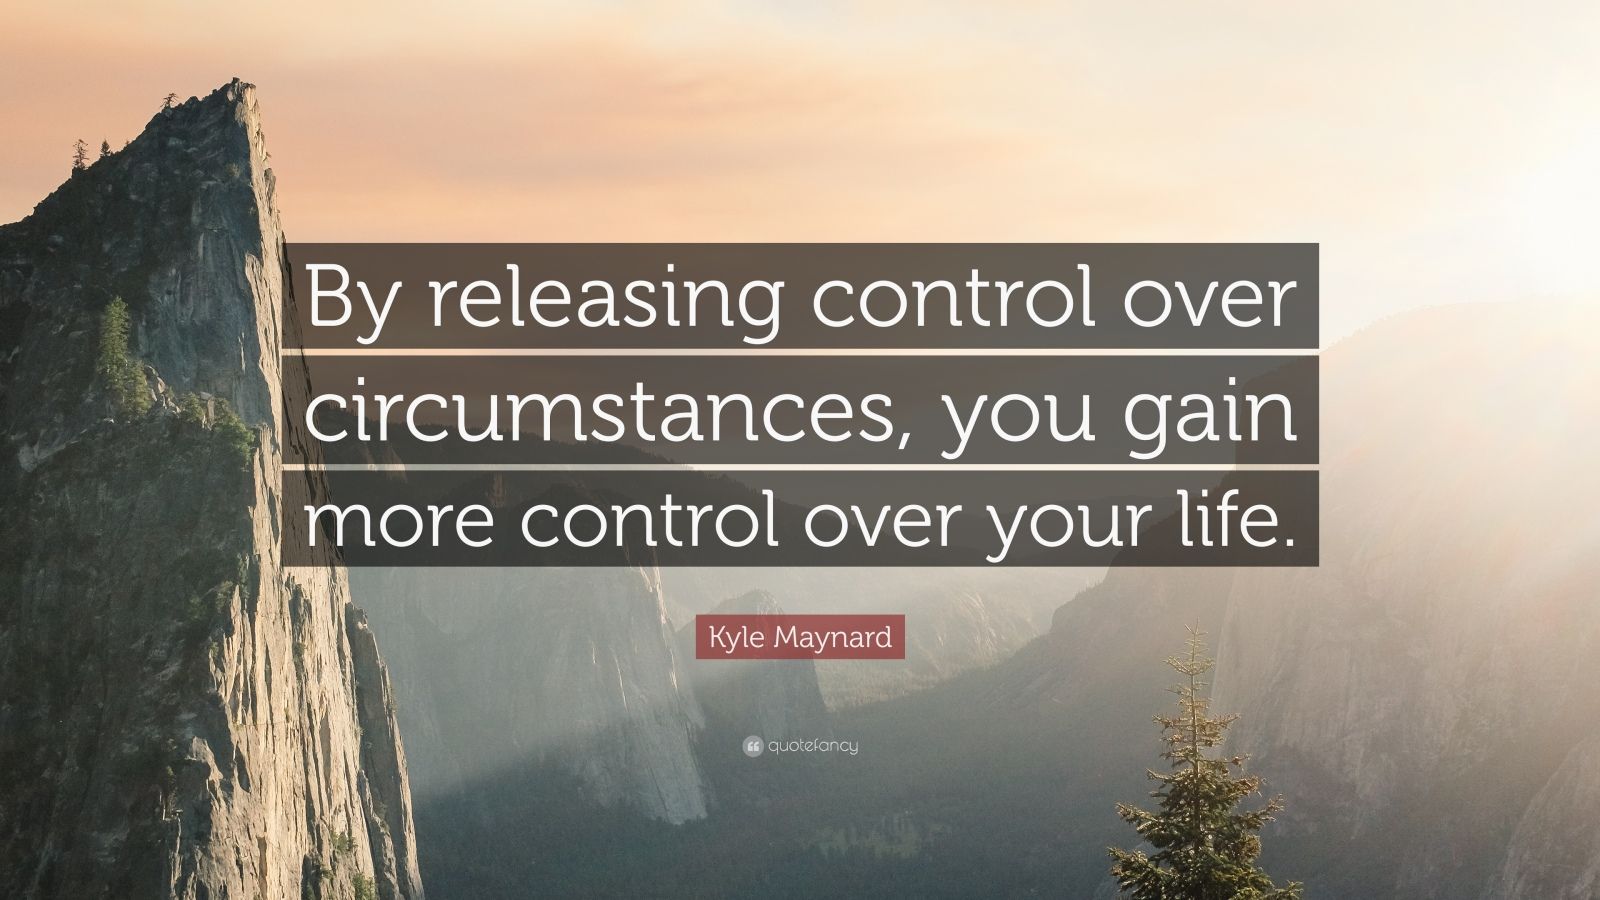 Releasing control quote